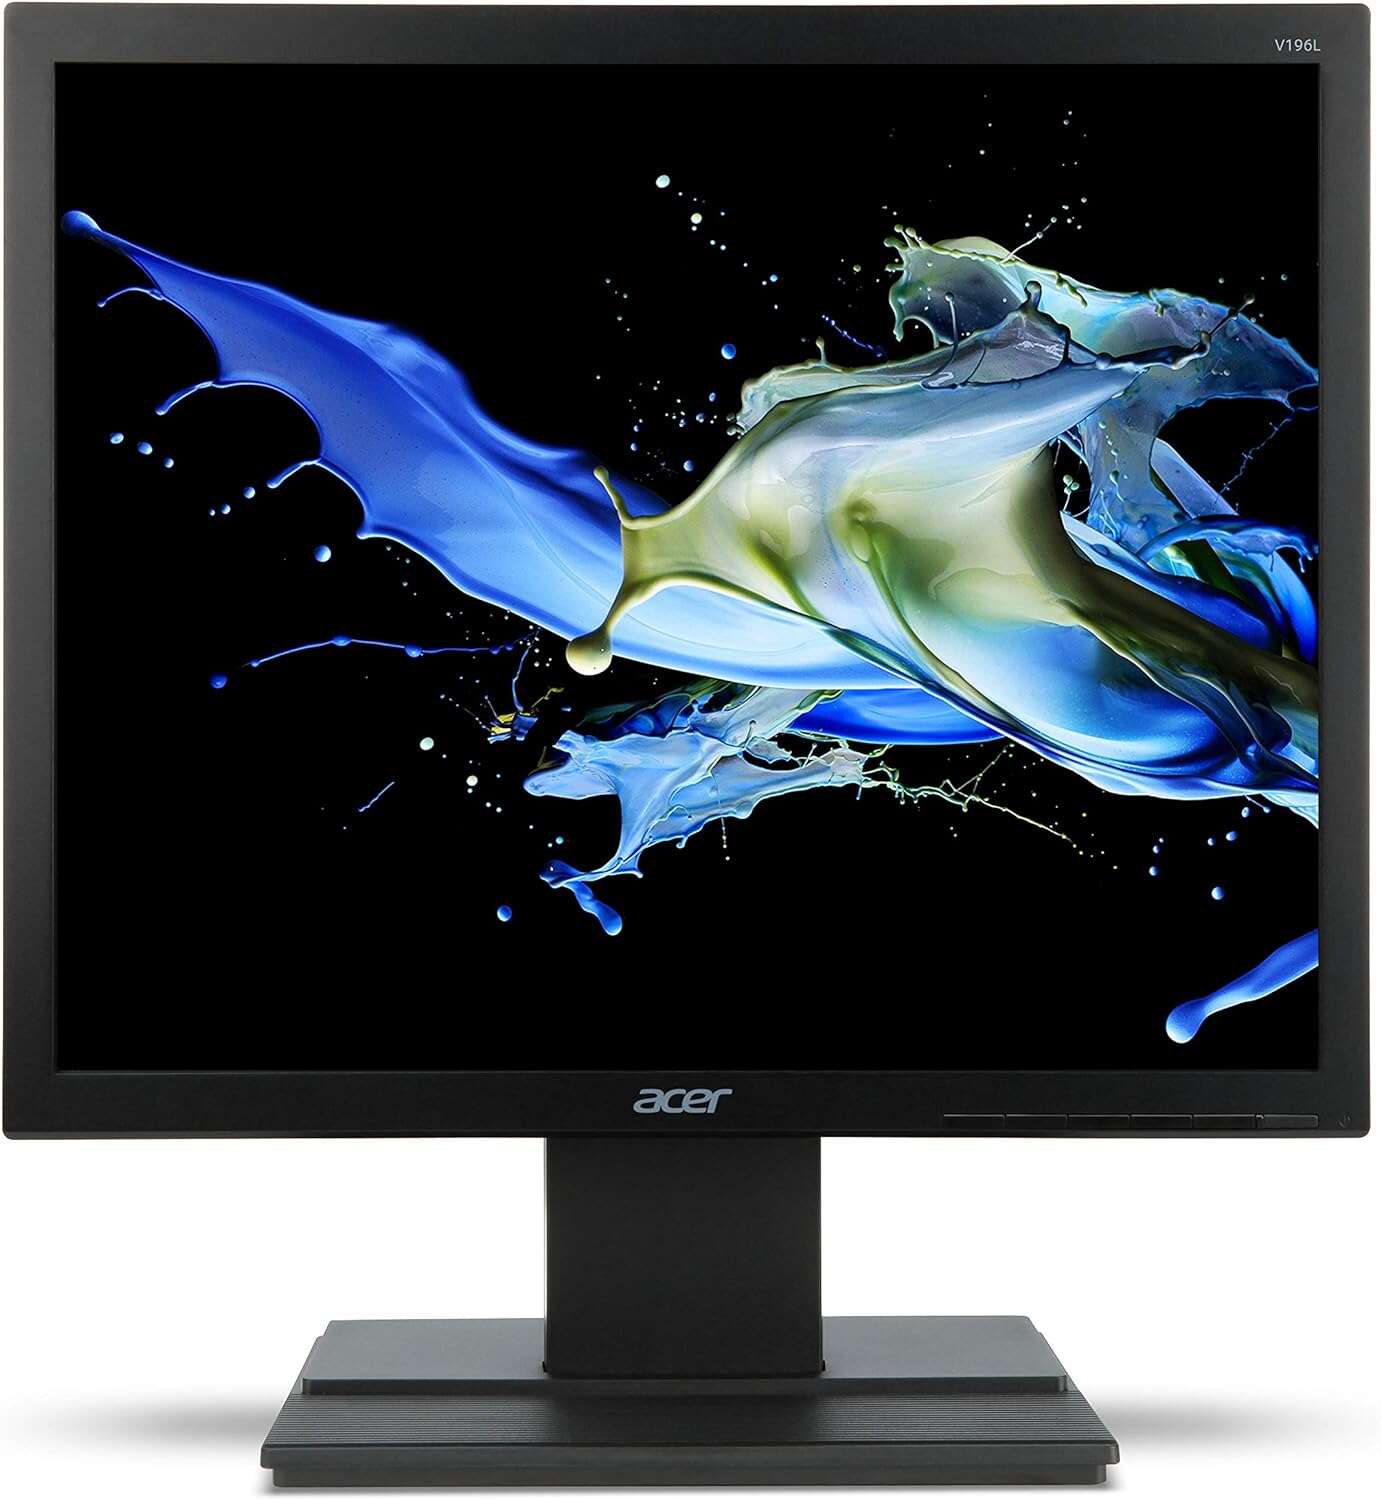 Acer 19" v196lb monitor